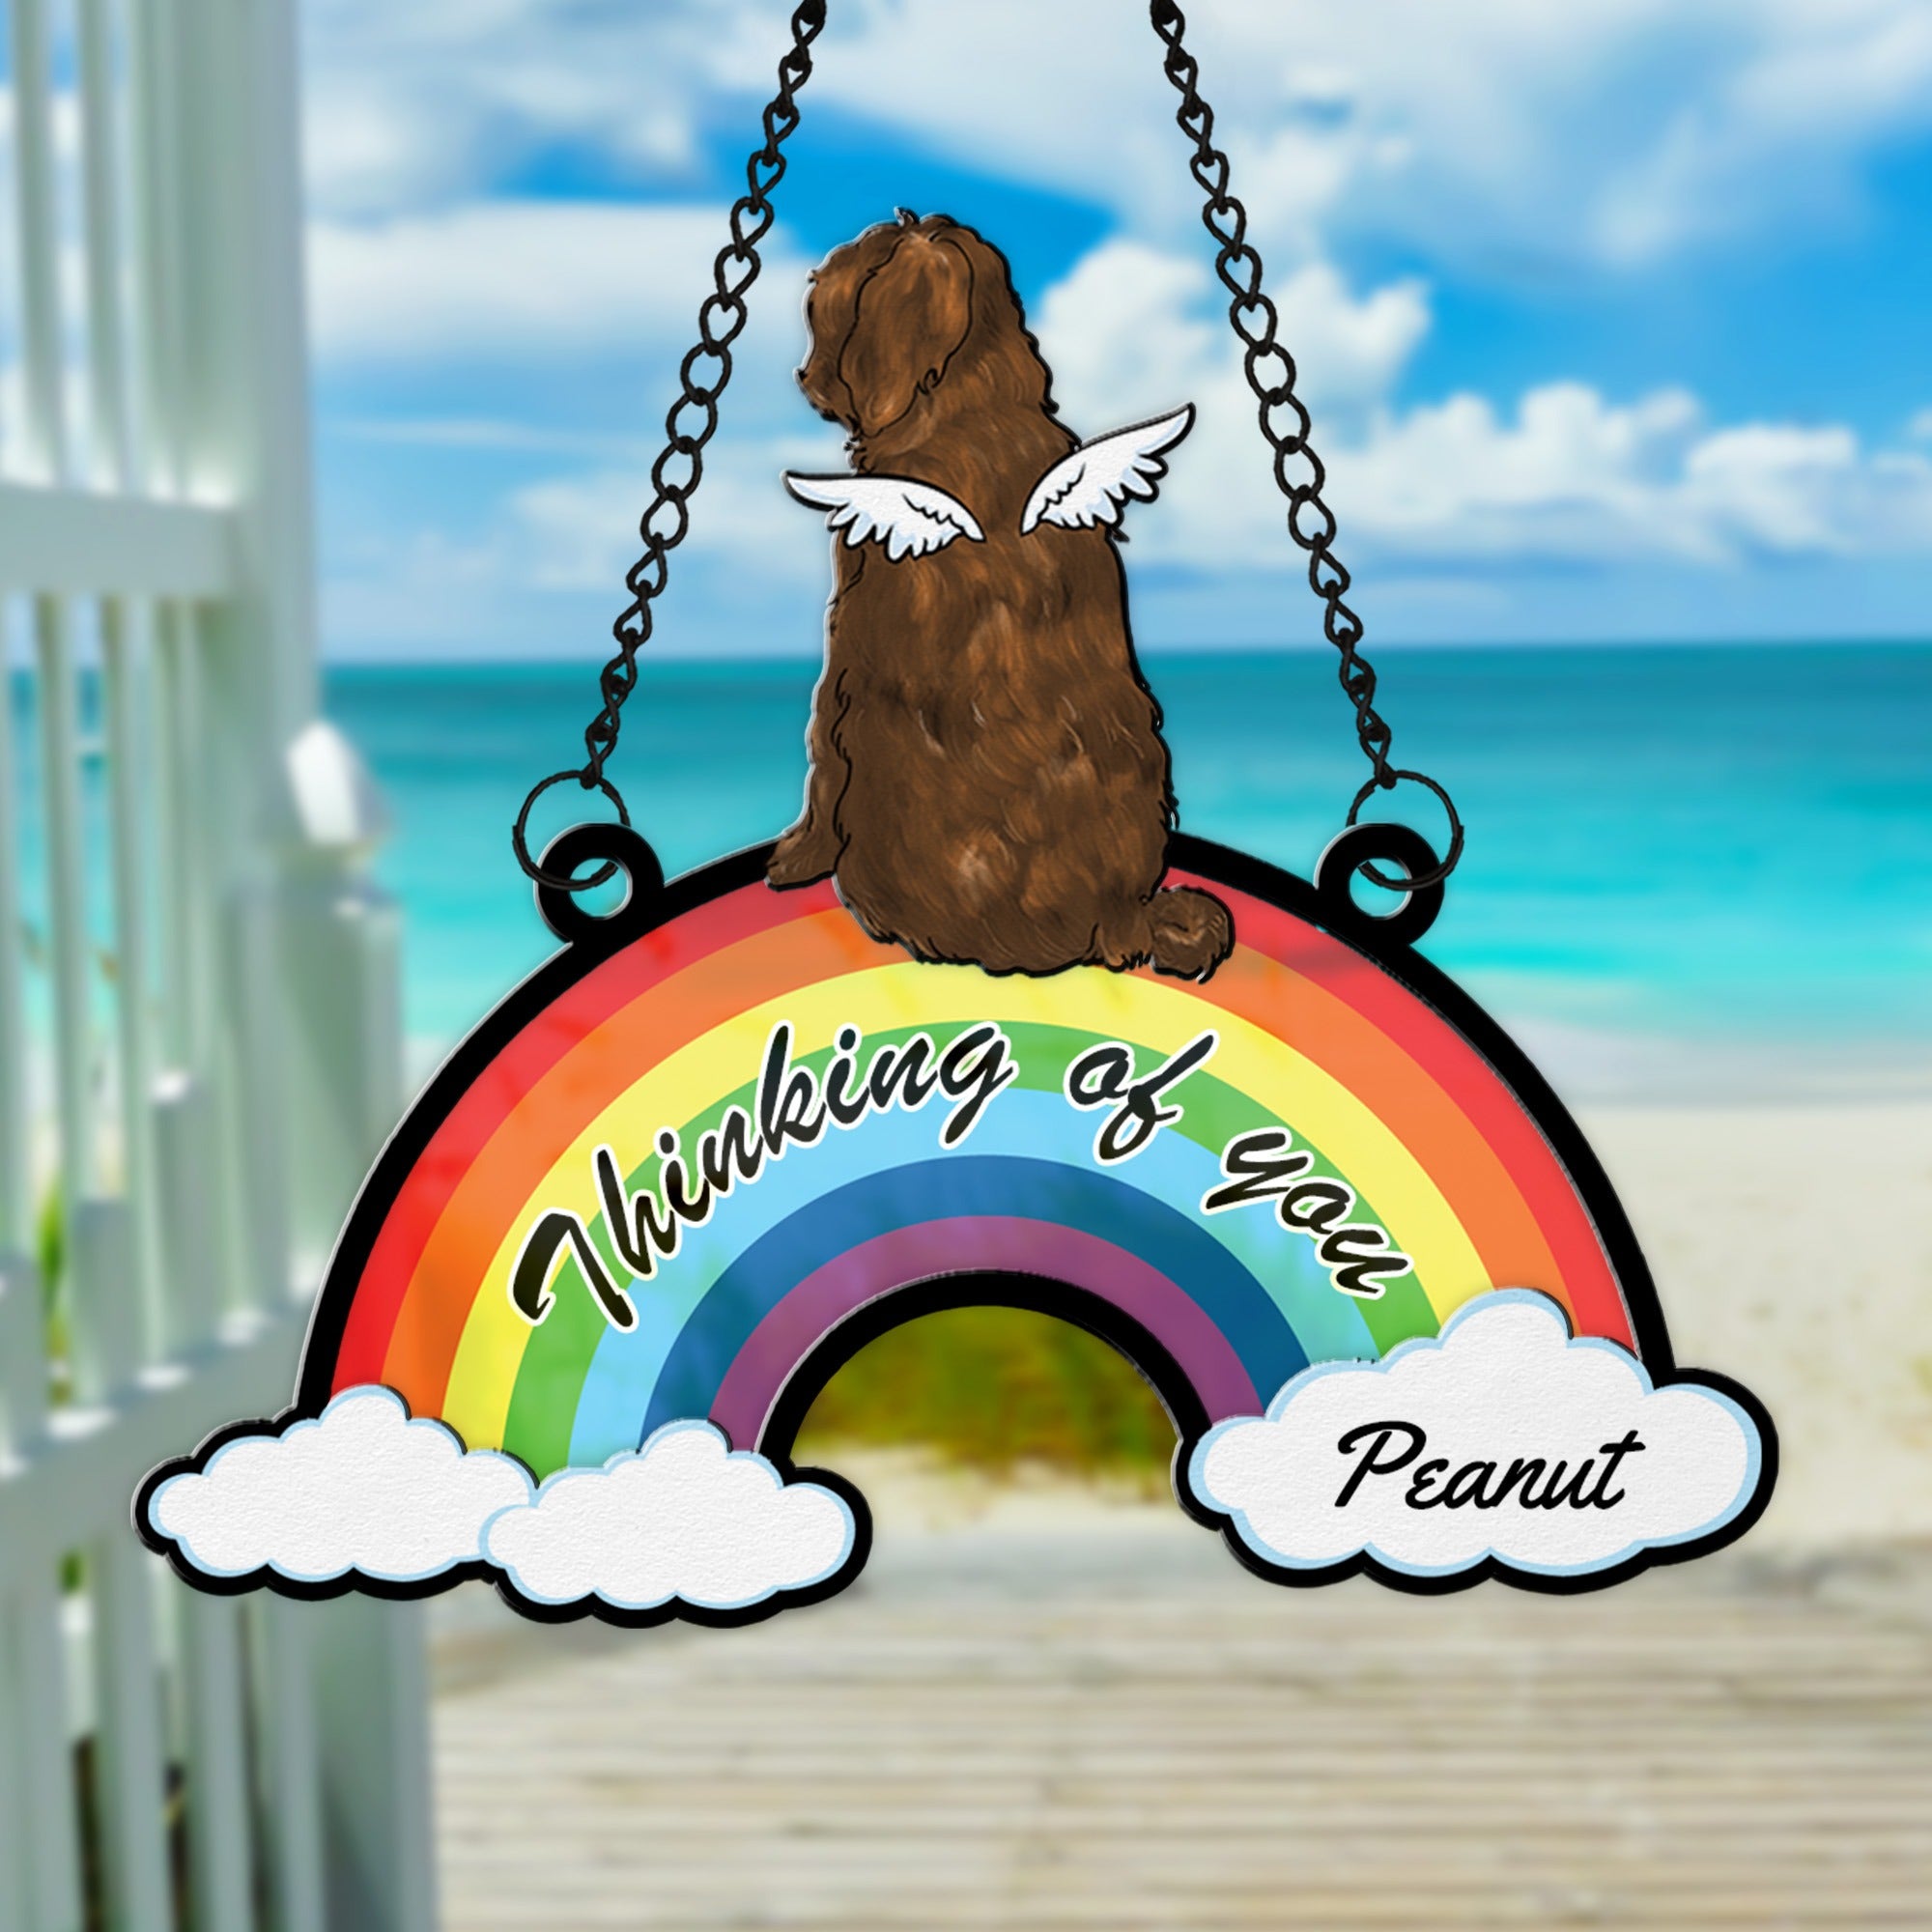 Personalized Funny Dog With Rainbow Bridge Thinking Of You Hanging Suncatcher Ornament